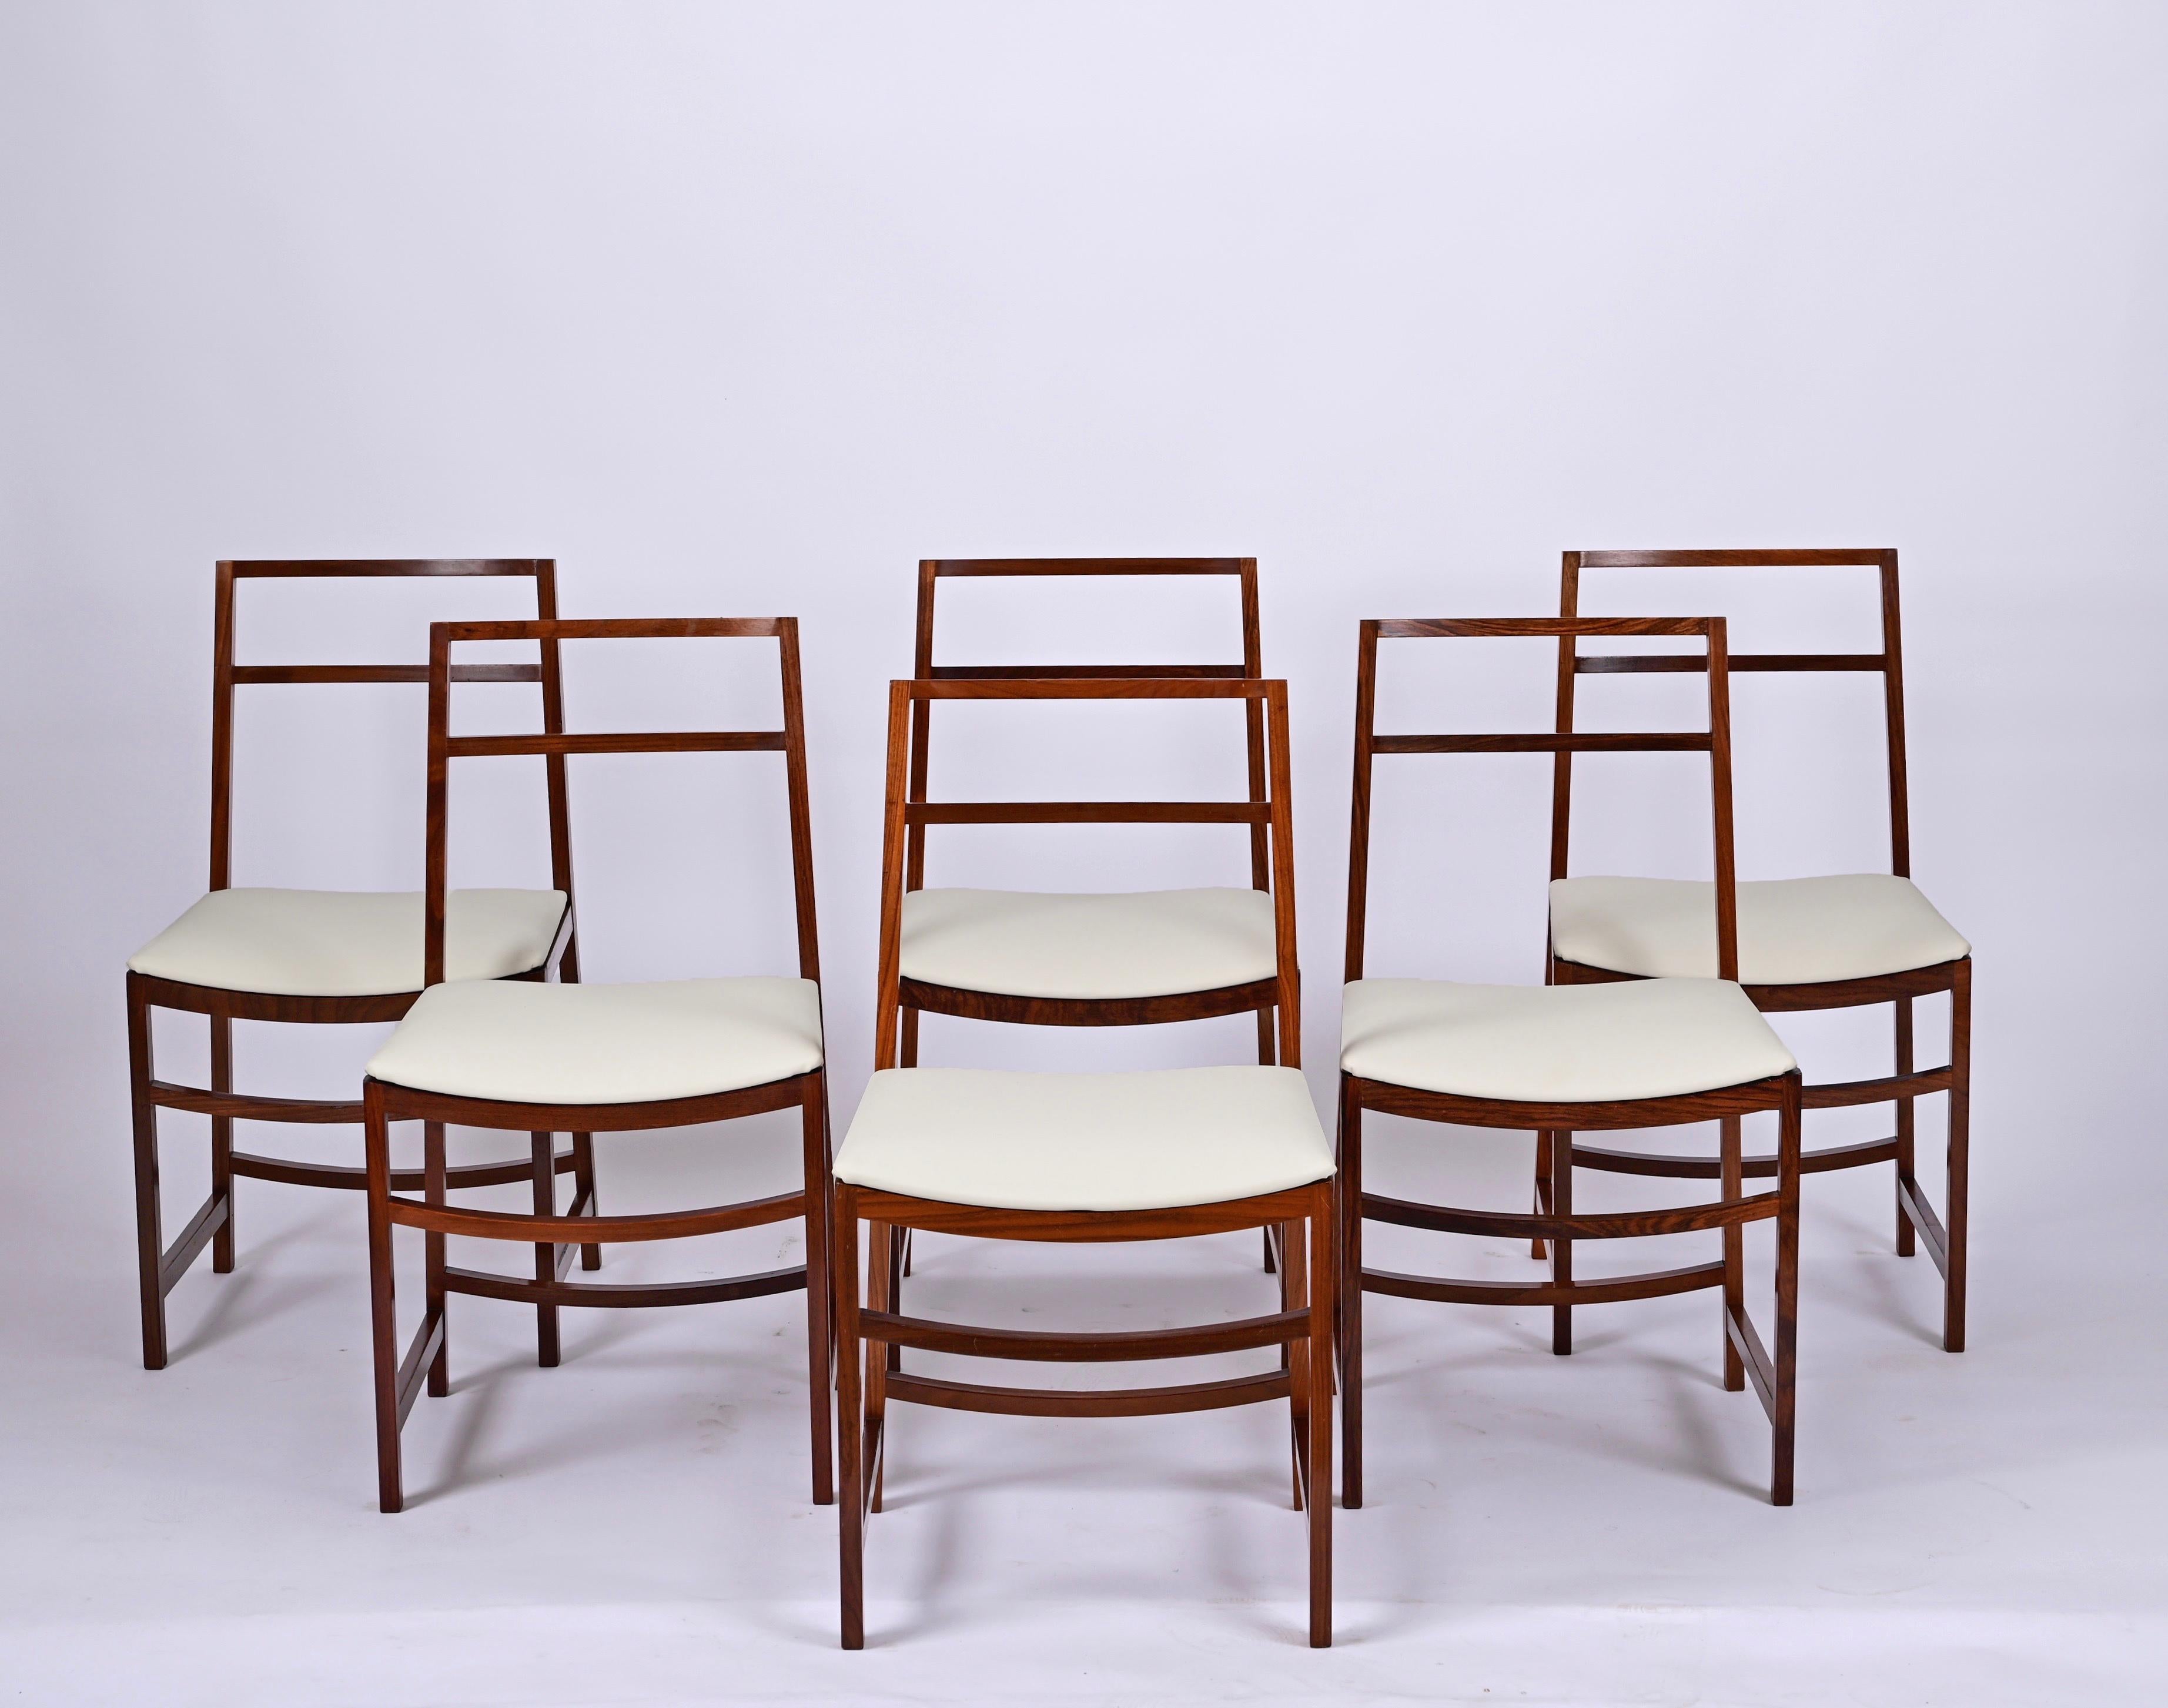 Midcentury Italian Dining Chairs in Teak, Renato Venturi for MIM Roma, 1960s For Sale 2